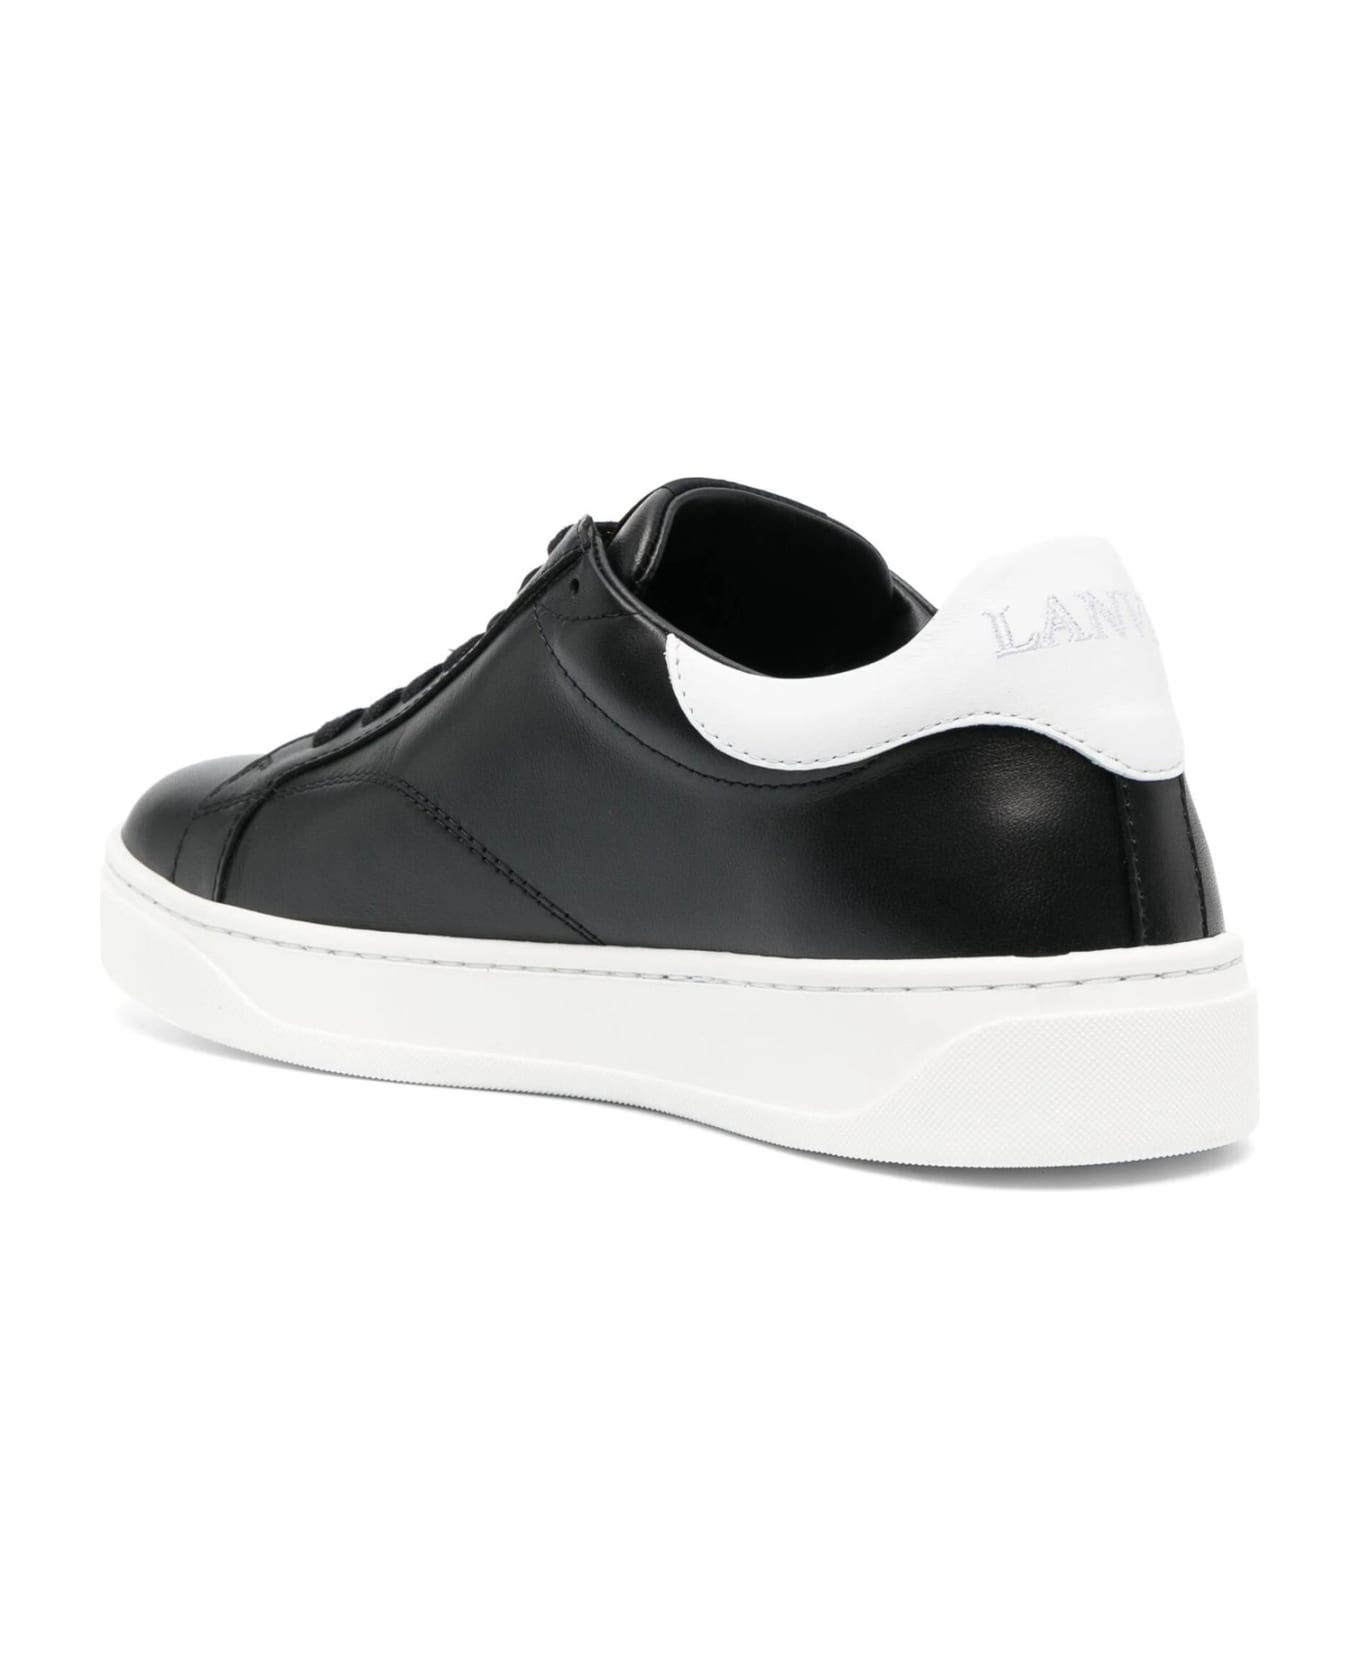 Lanvin Sneakers Black - Black スニーカー